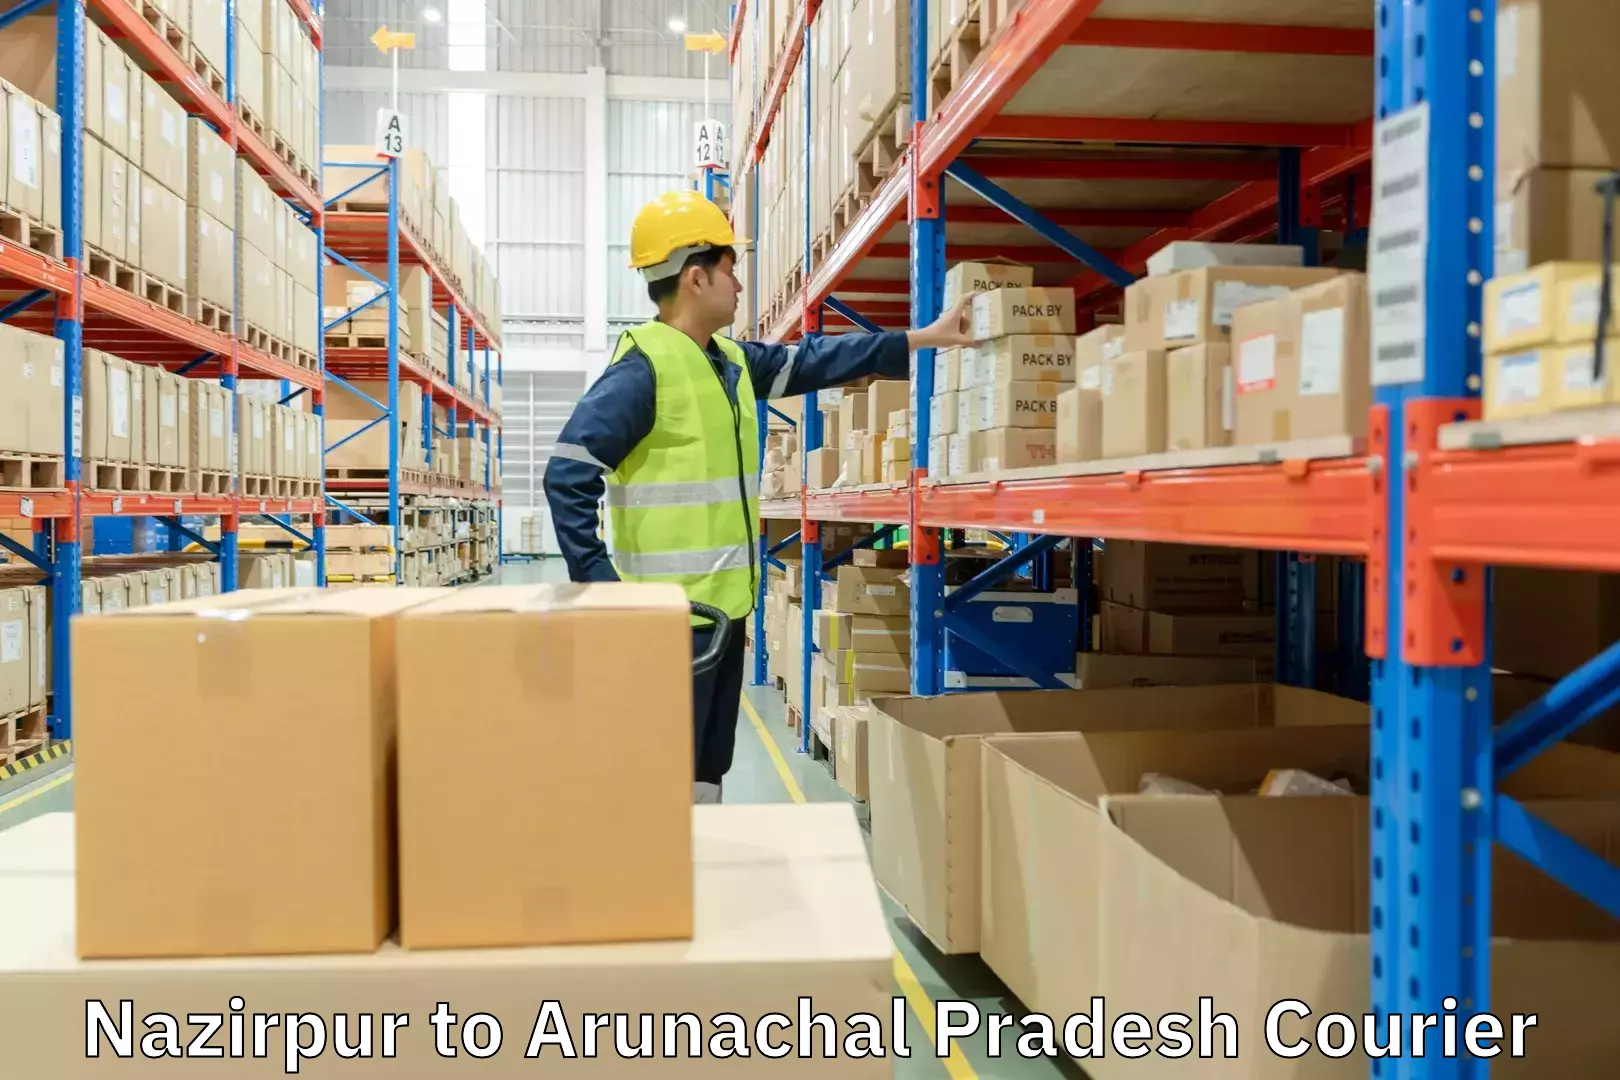 State-of-the-art courier technology Nazirpur to Arunachal Pradesh